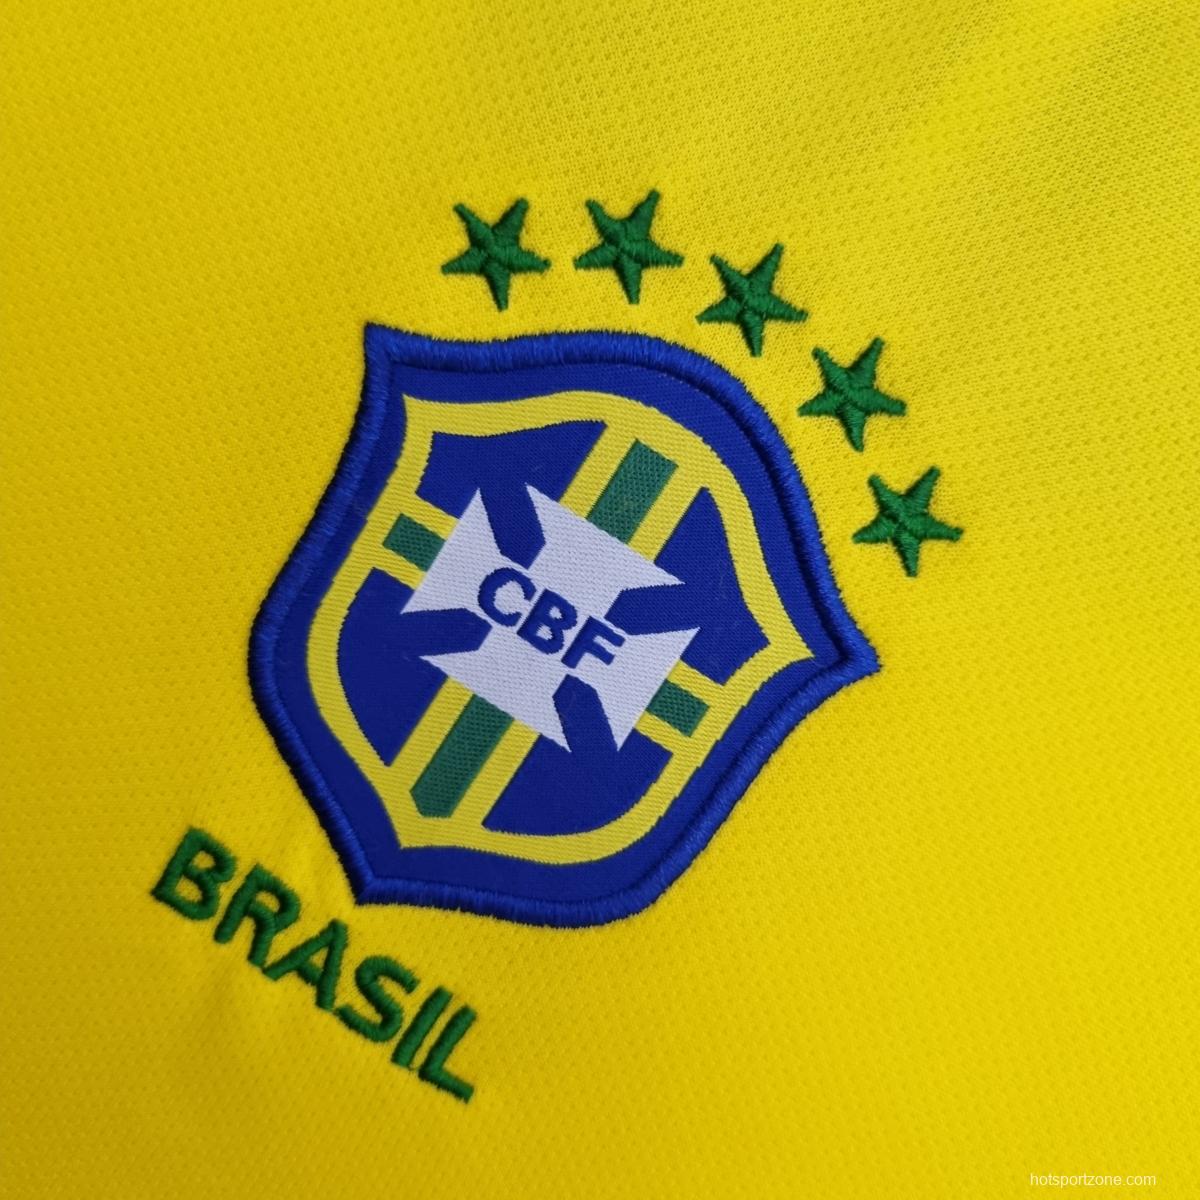 Retro 2004/06 Brazil Soccer Jersey